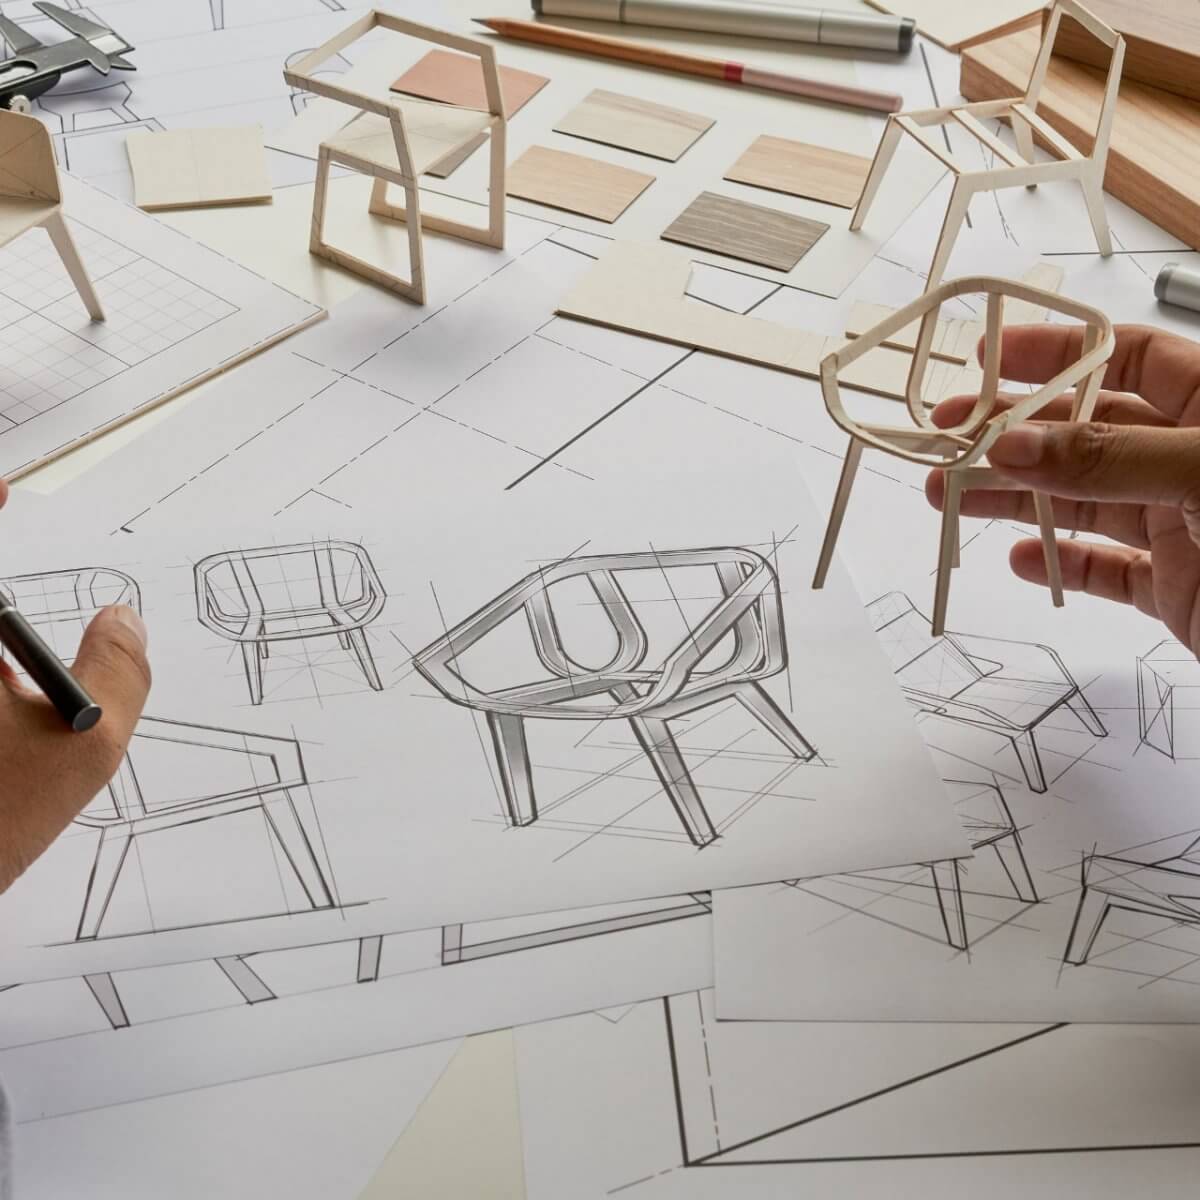 ArtStation - Quick digital furniture sketches by Anastasia Chaplenko